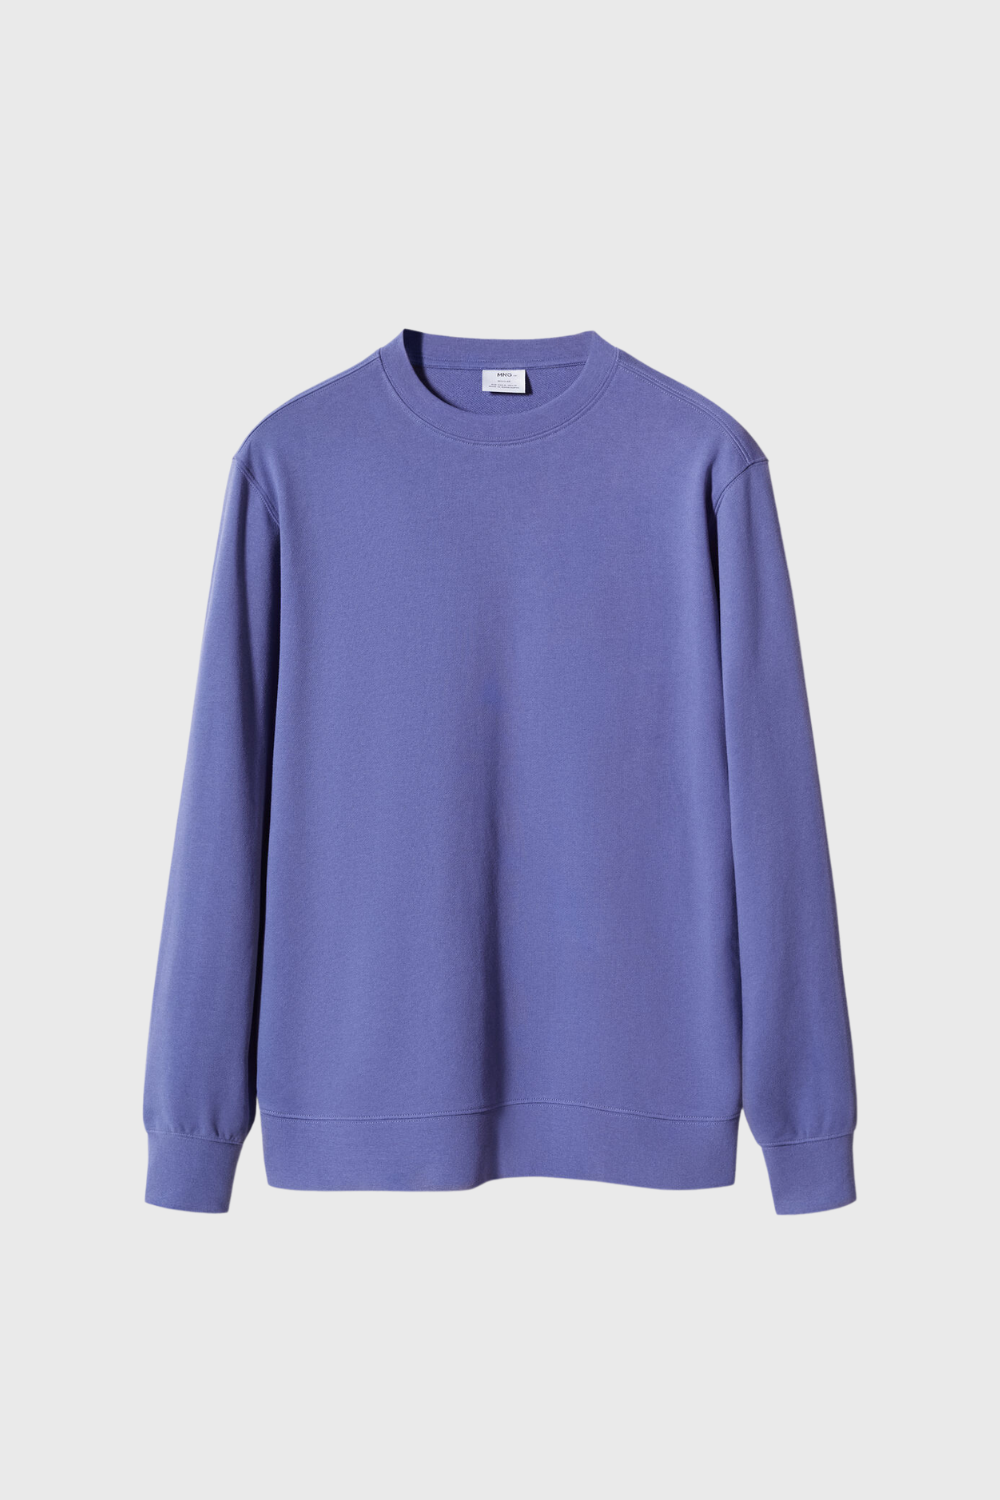 lightweight cotton sweatshirt